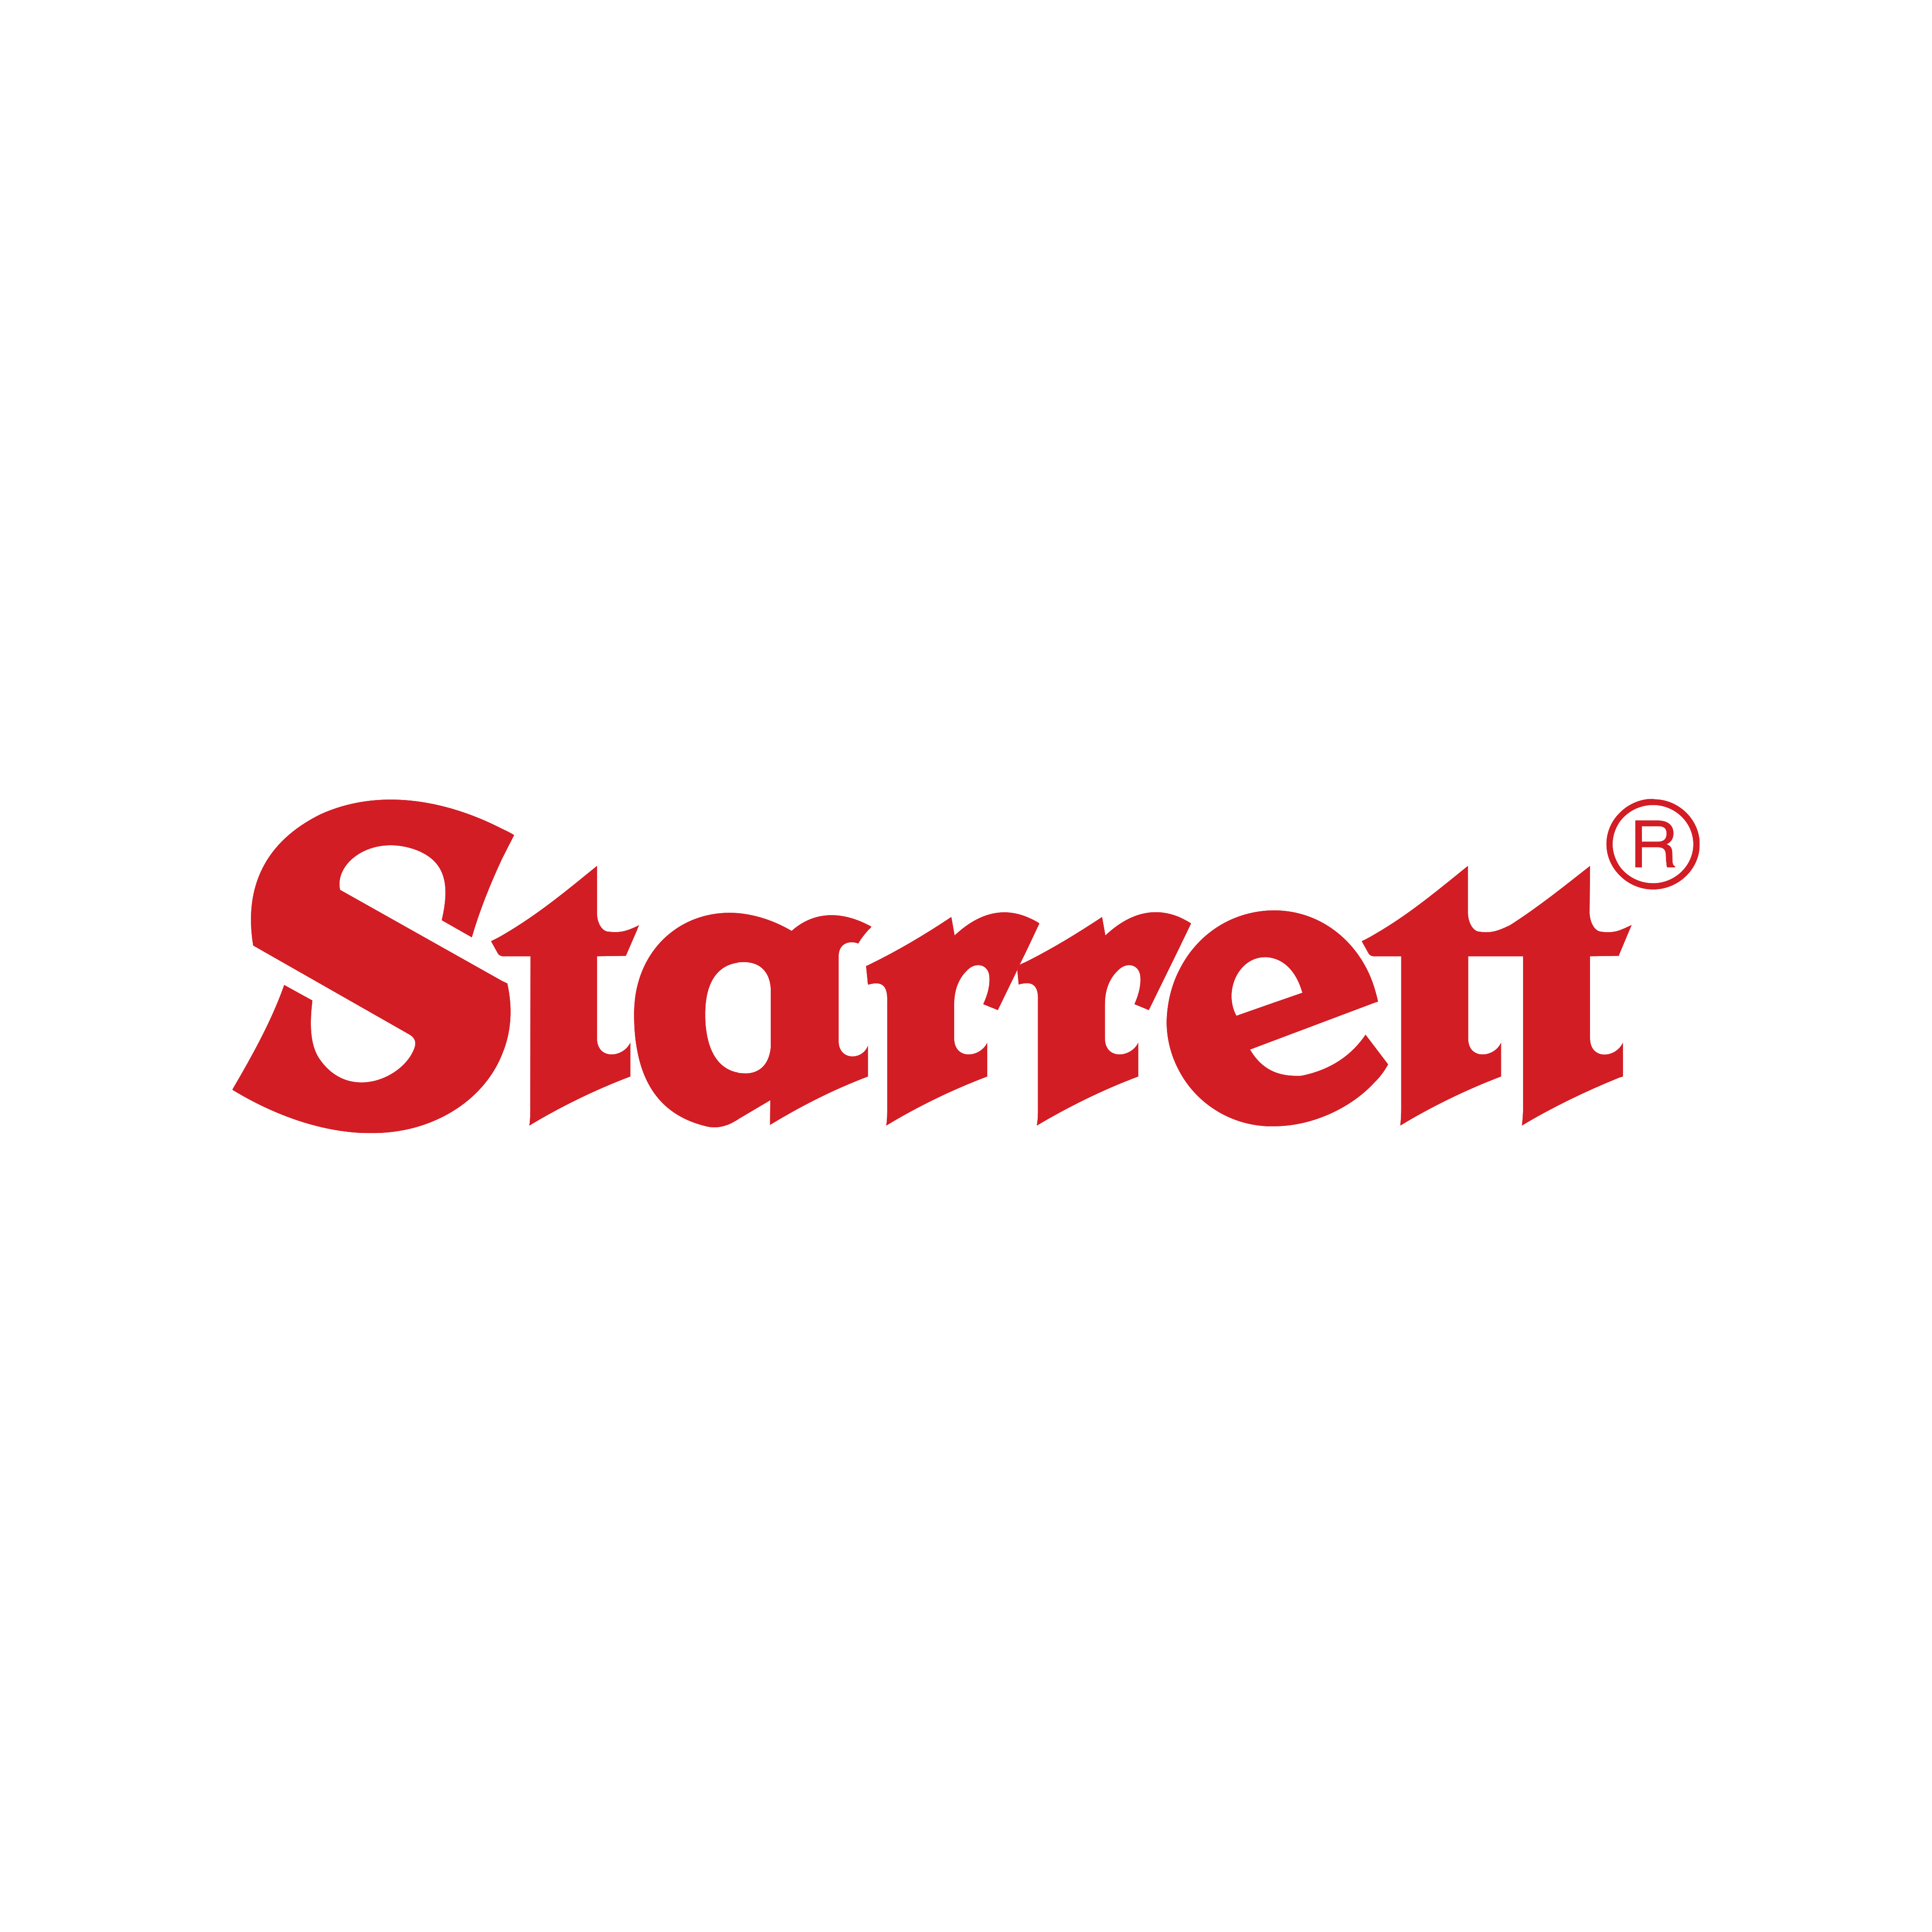 starrett logo 0 - Starrett Logo